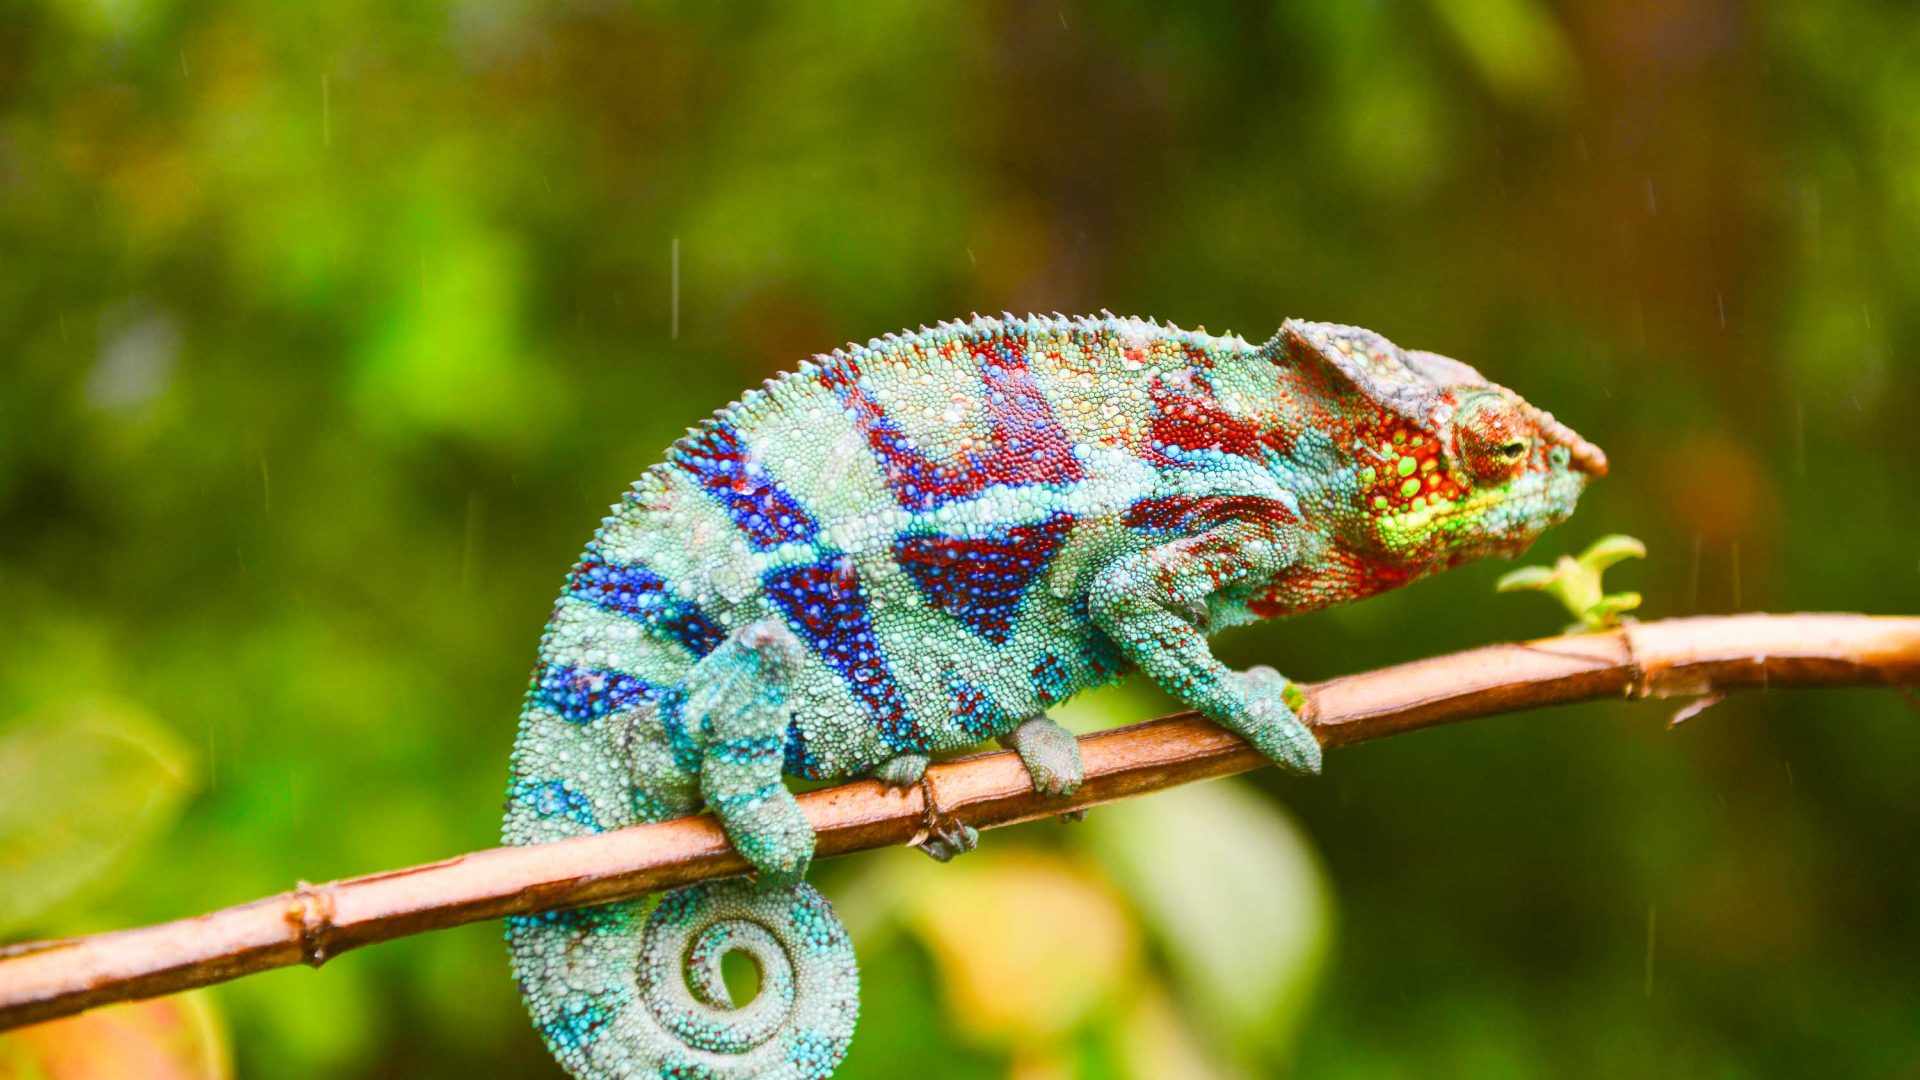 A chameleon near the village of Vohimana, Madagascar.